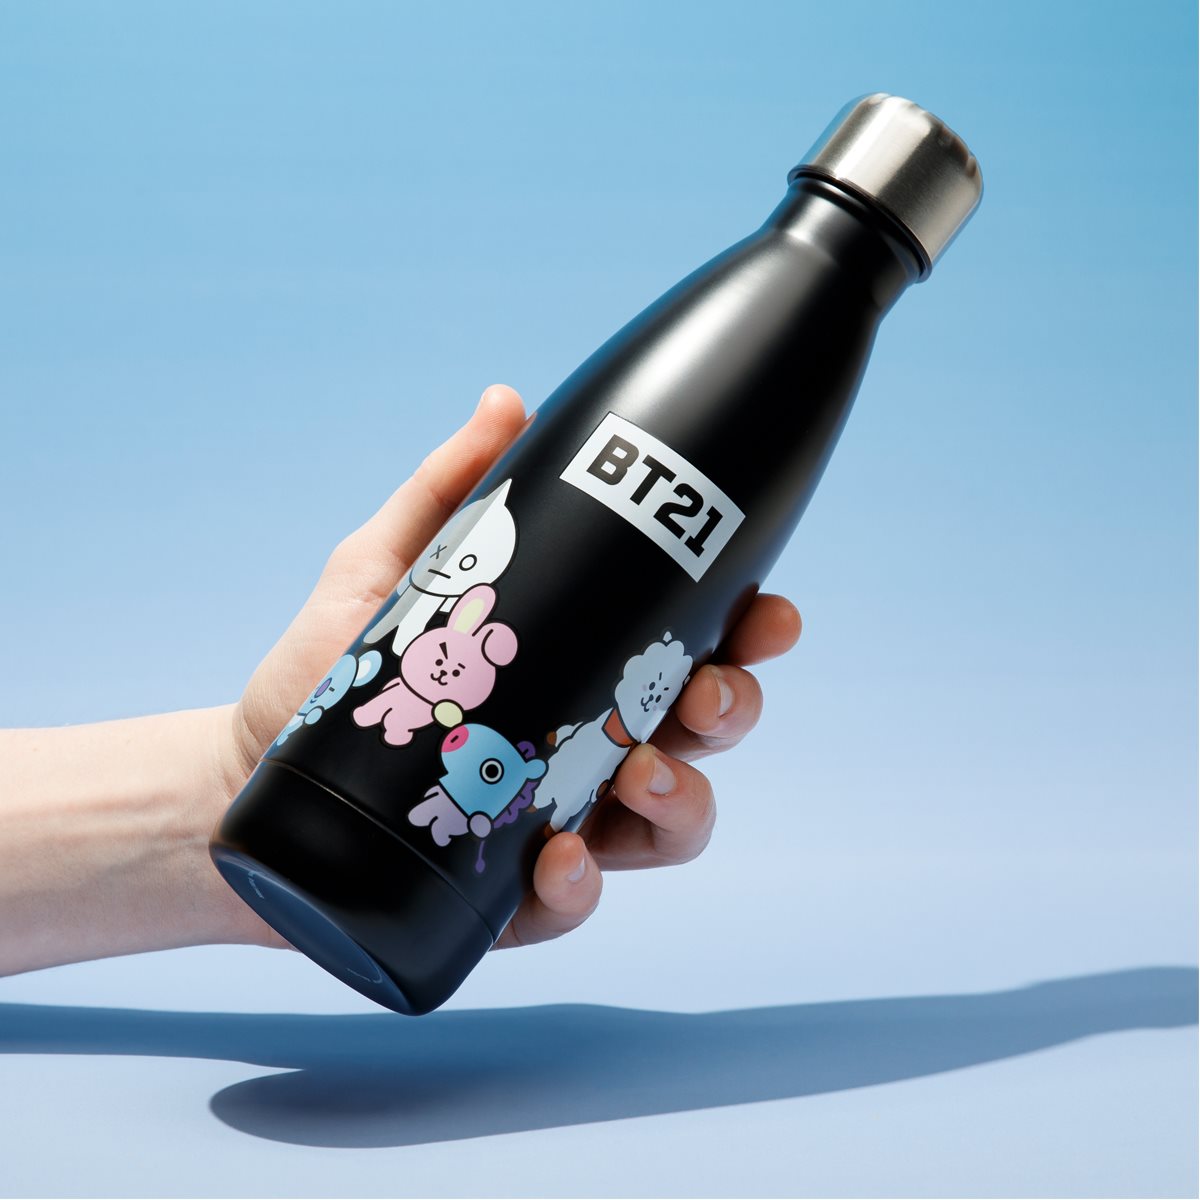 BT21 Stainless Steel Water Bottle – Sugar Seoul